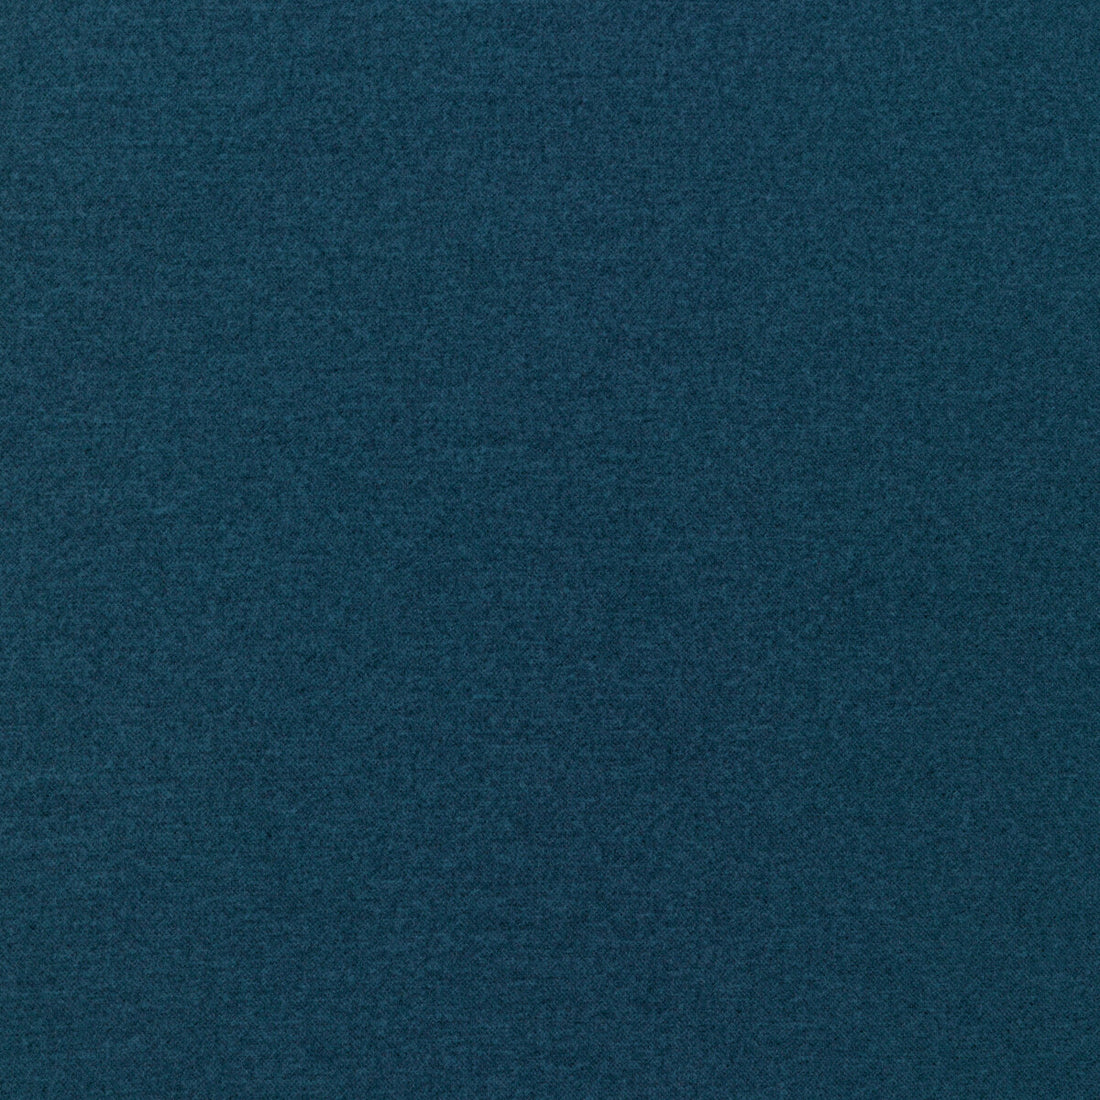 Kravet Smart fabric in 36110-5 color - pattern 36110.5.0 - by Kravet Smart in the Performance Kravetarmor collection